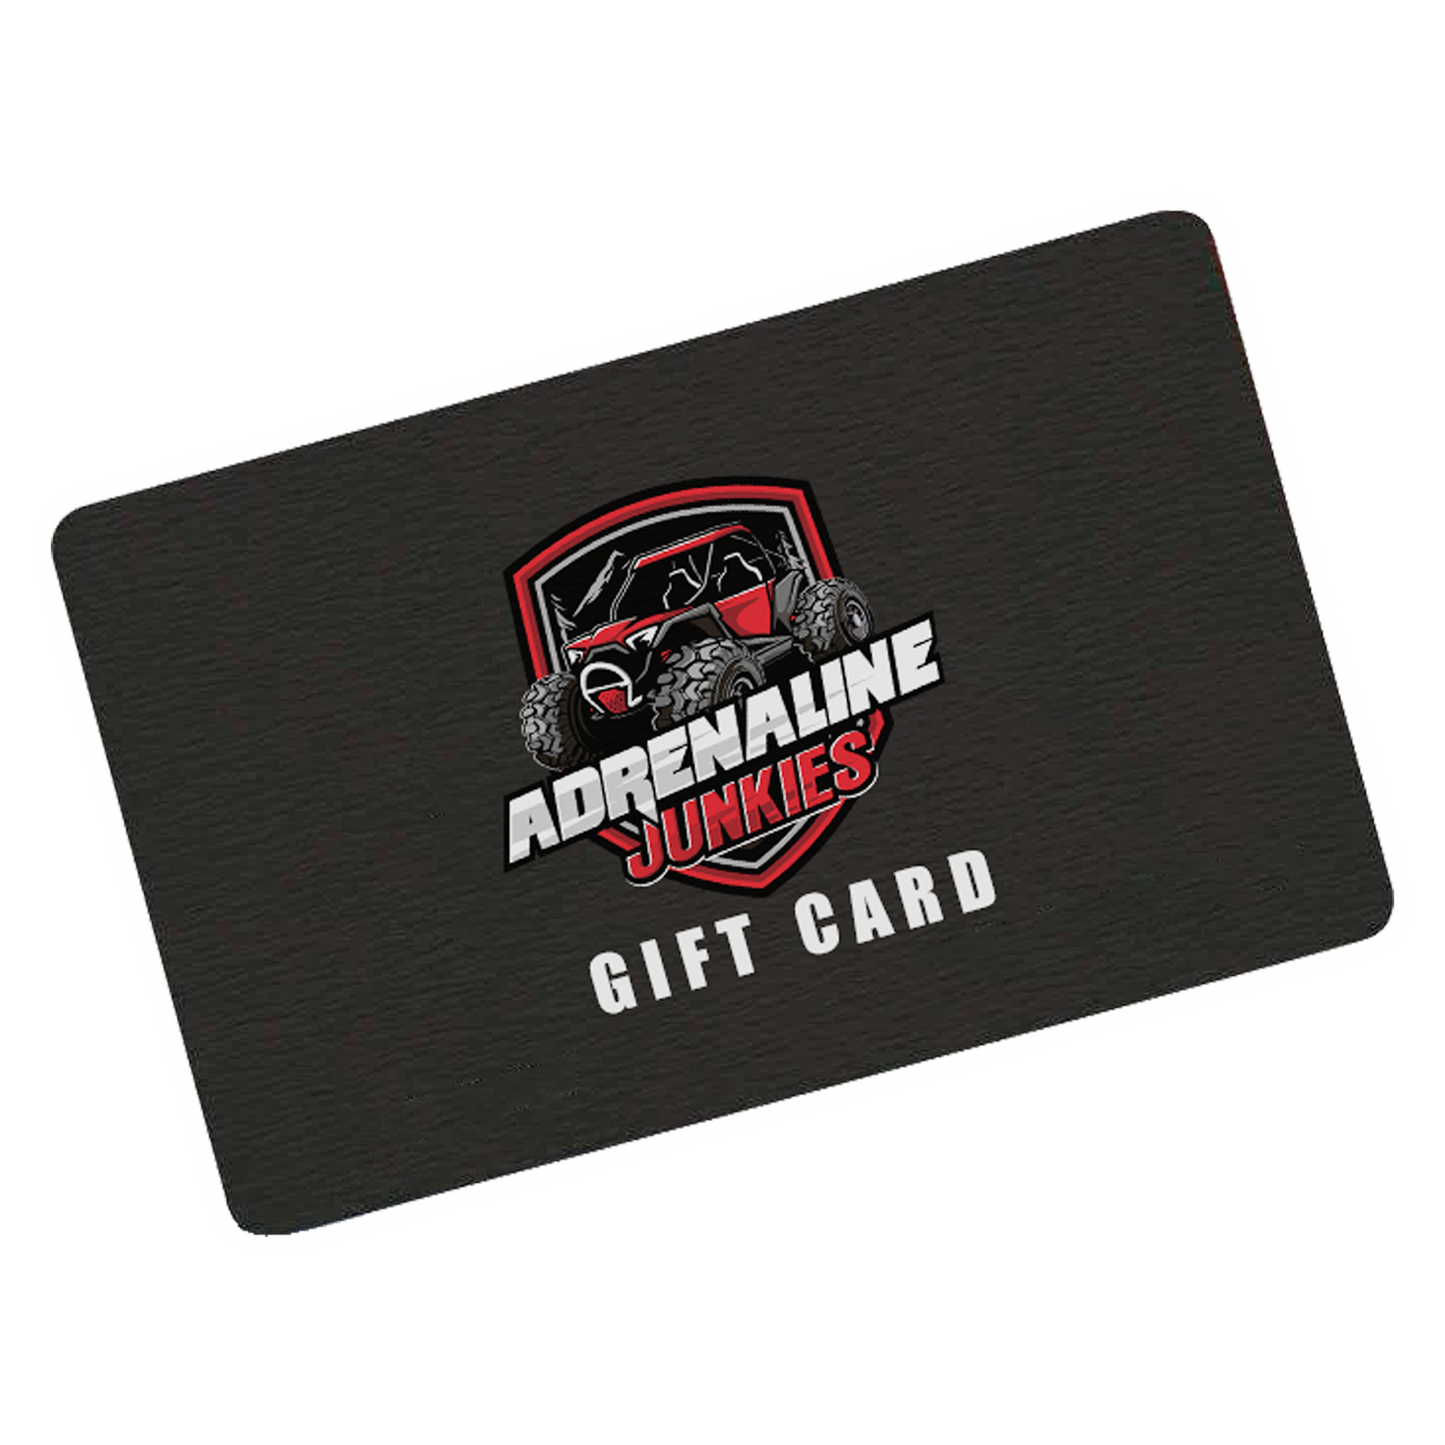 Adrenaline Junkies Gift Cards